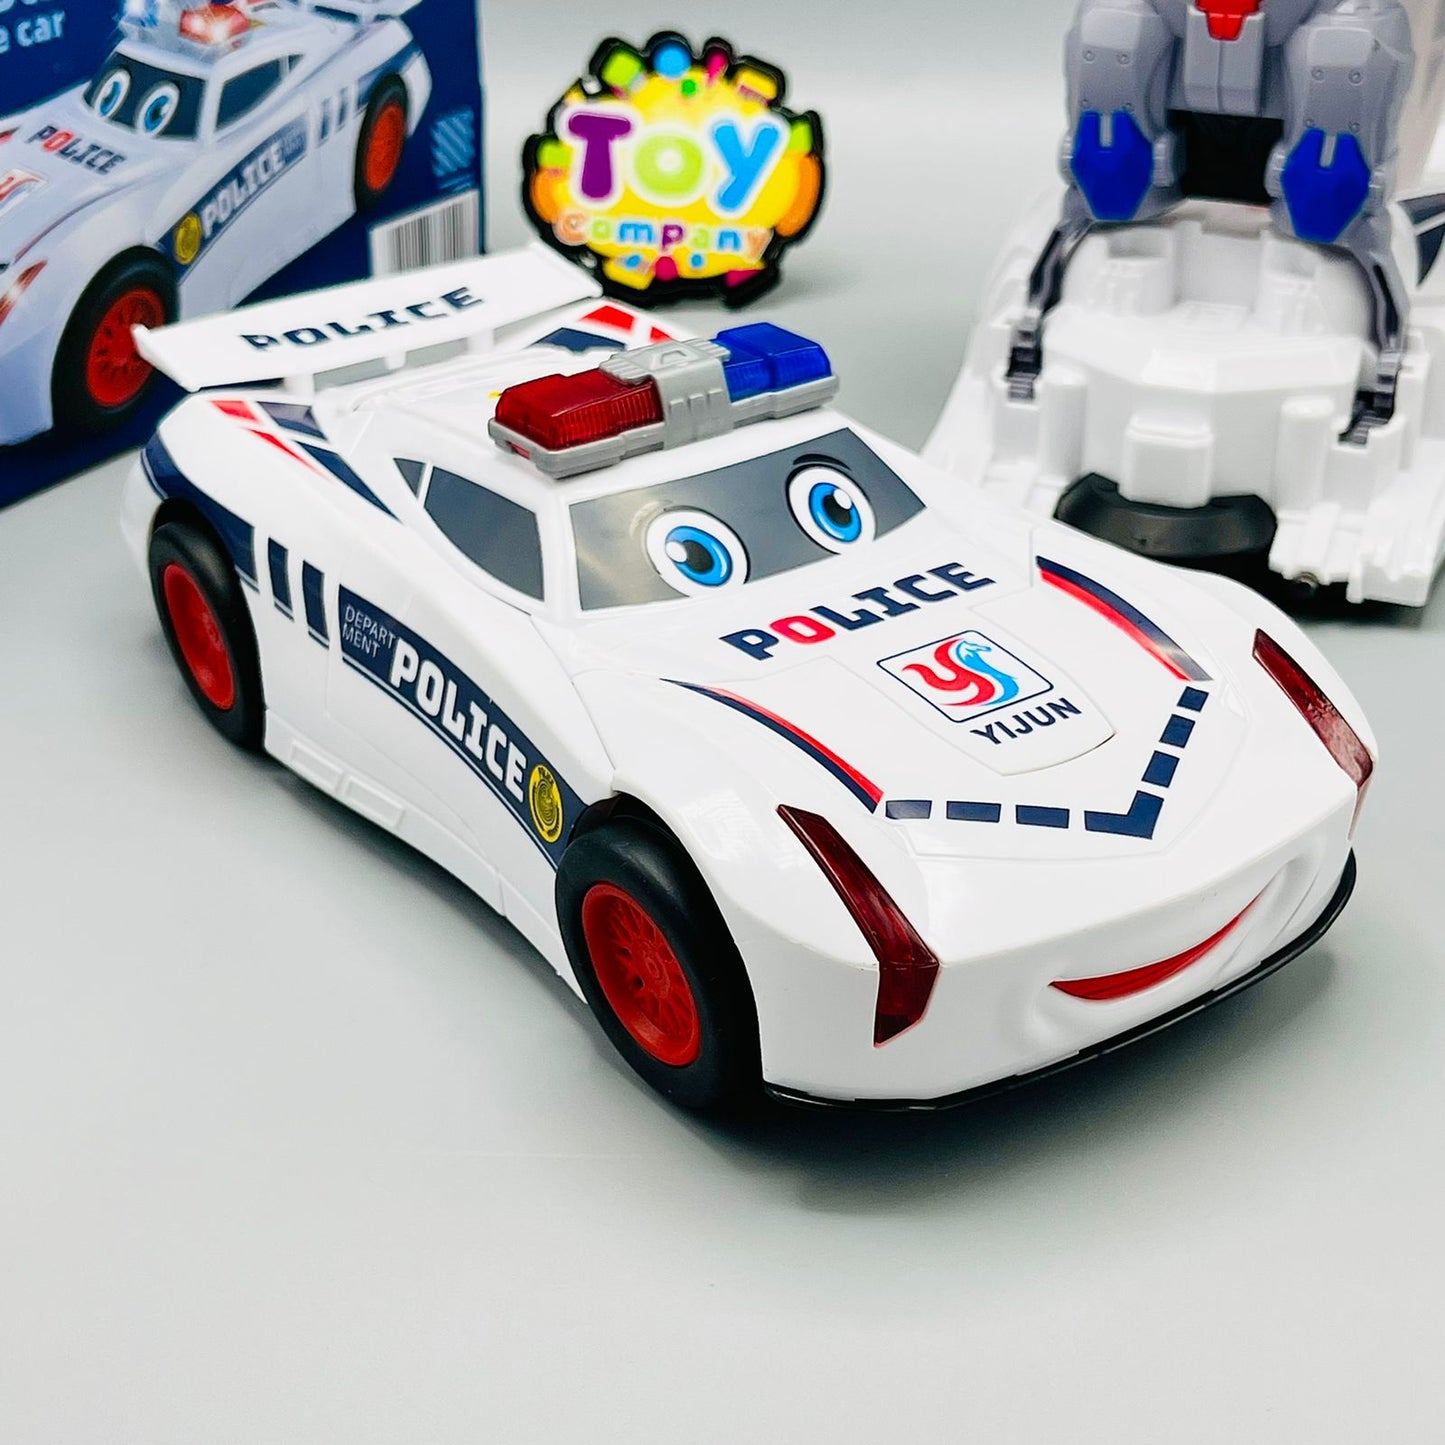 2-in-1 Robot Transformer Police Car